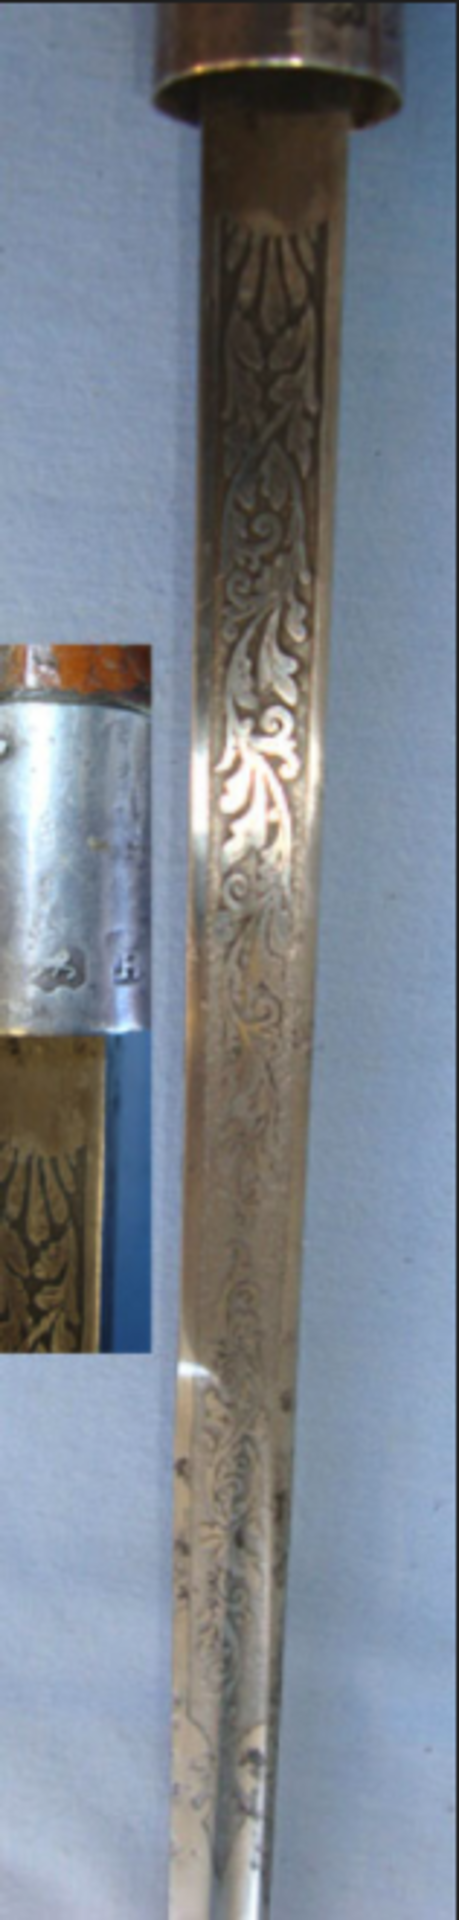 Victorian Gentleman's Silver Mounted Varnished Cane Form Sword Stick - Image 3 of 3